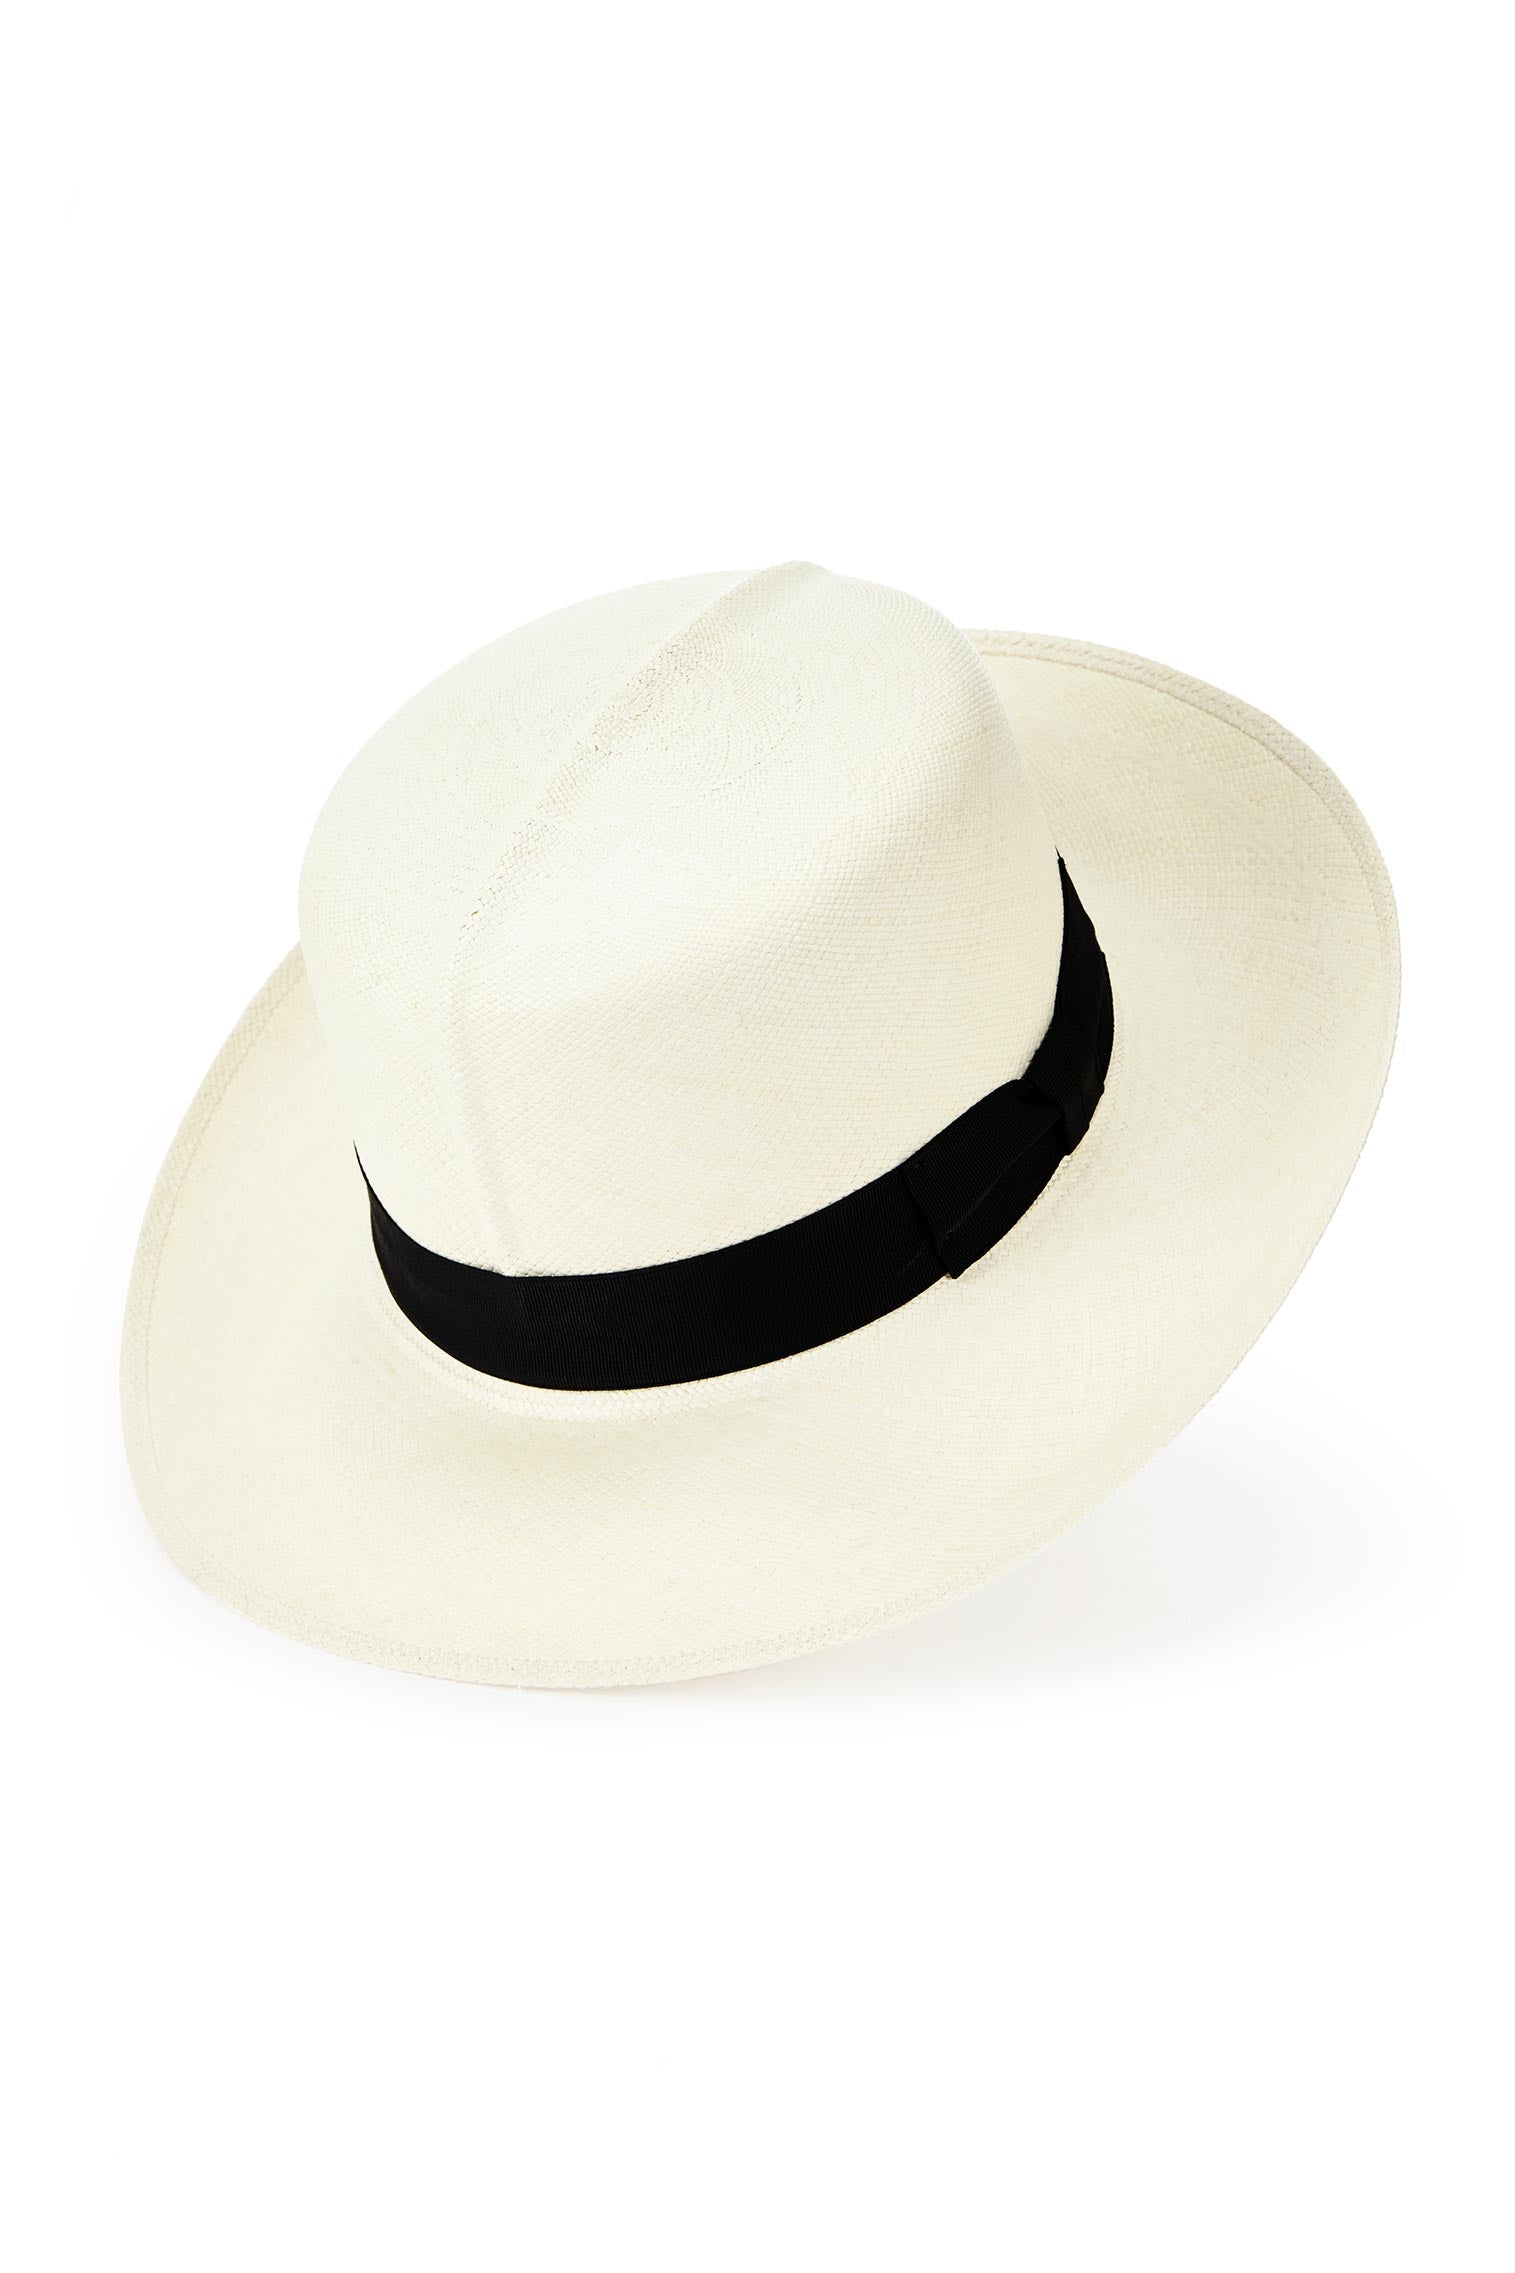 Men's Rollable Panama - Panamas and Sun Hats for Men - Lock & Co. Hatters London UK